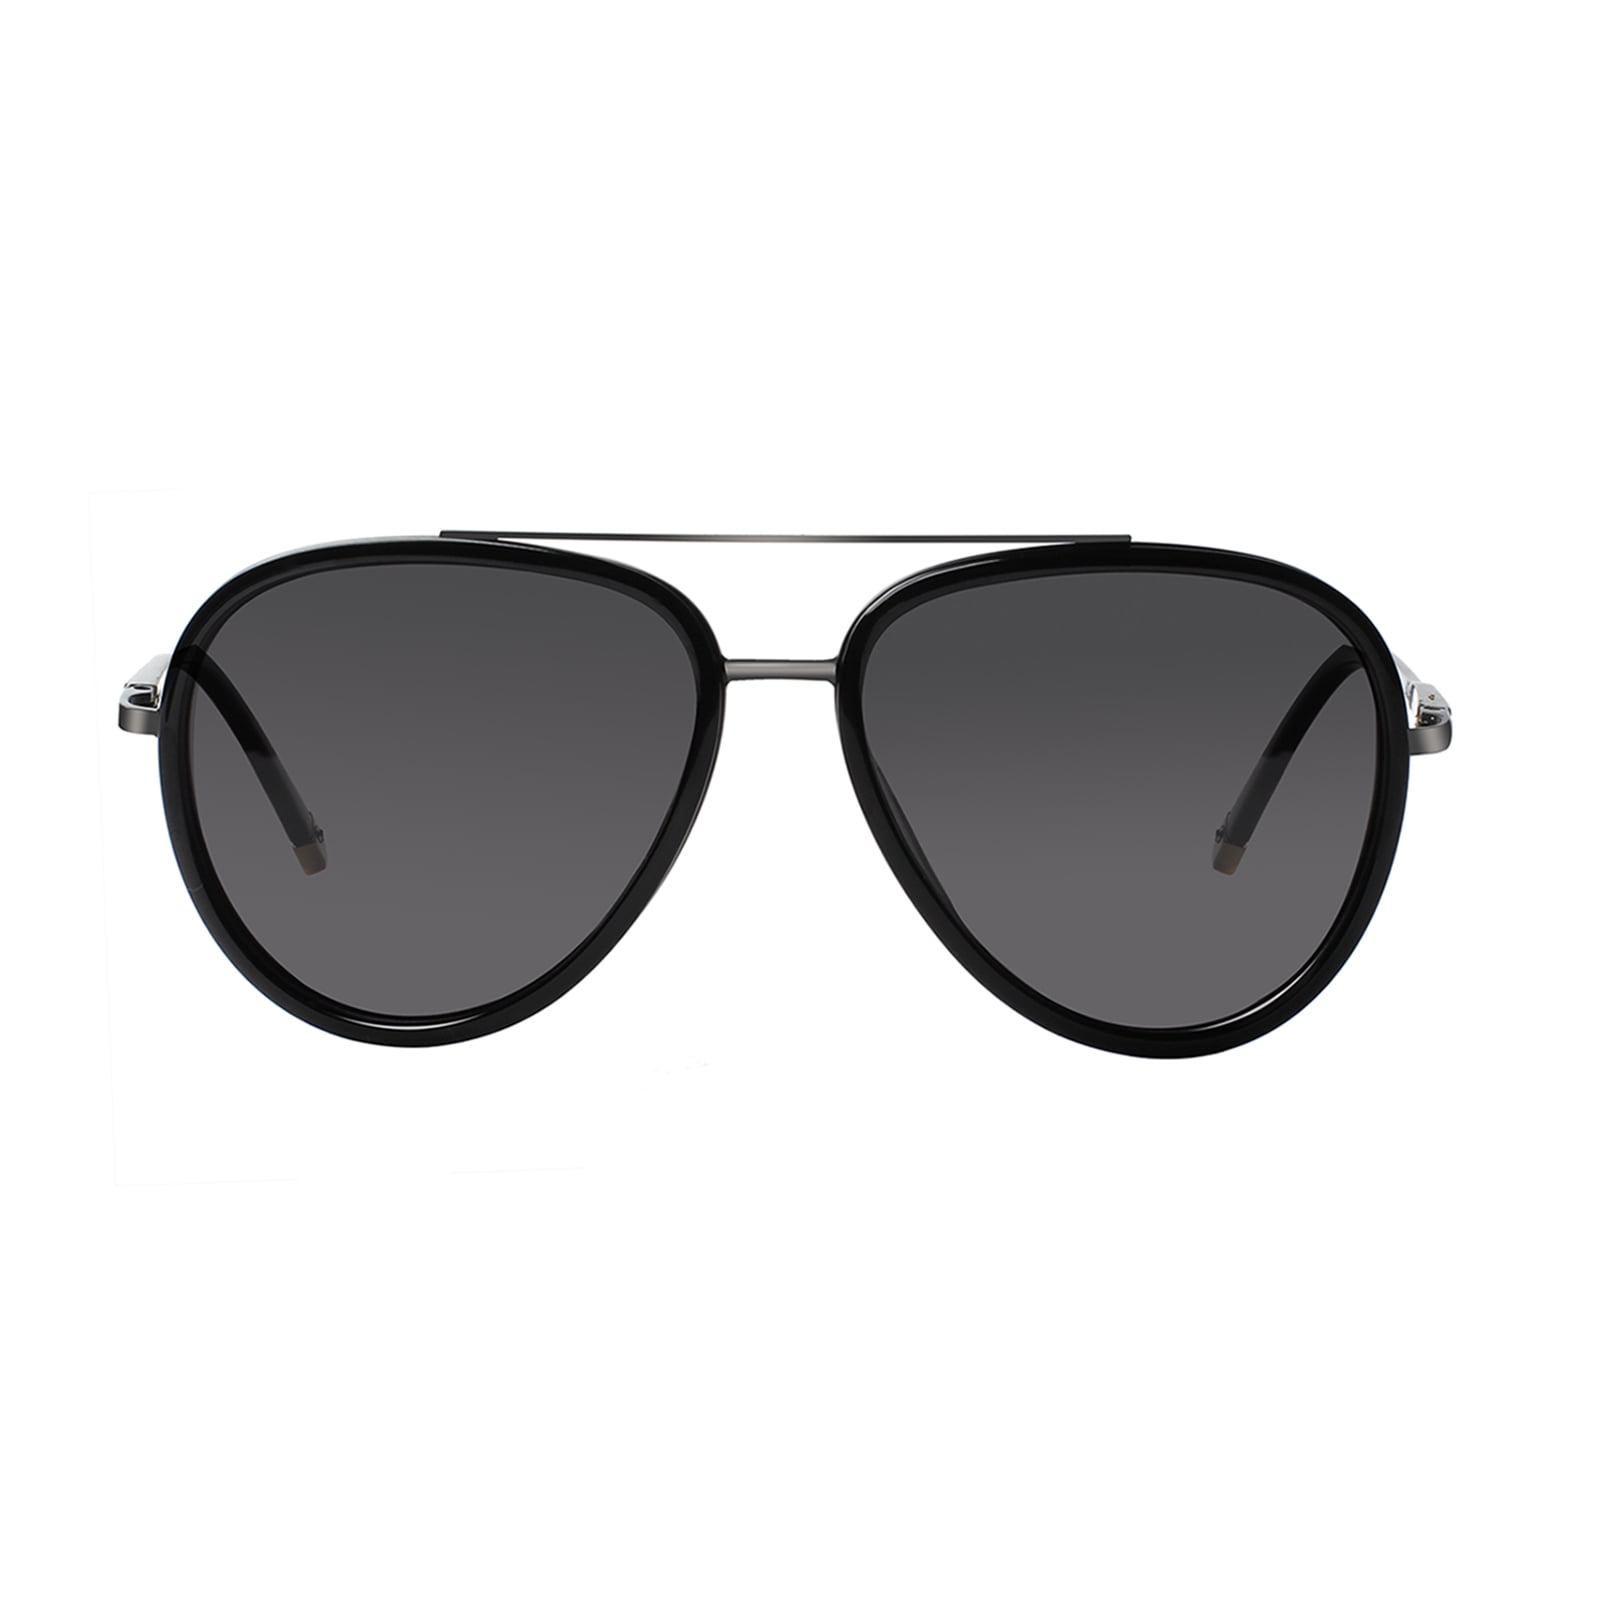 SUNVOE Spolarized Sunglasses for Men VU400 Protection Spring Hinge ...